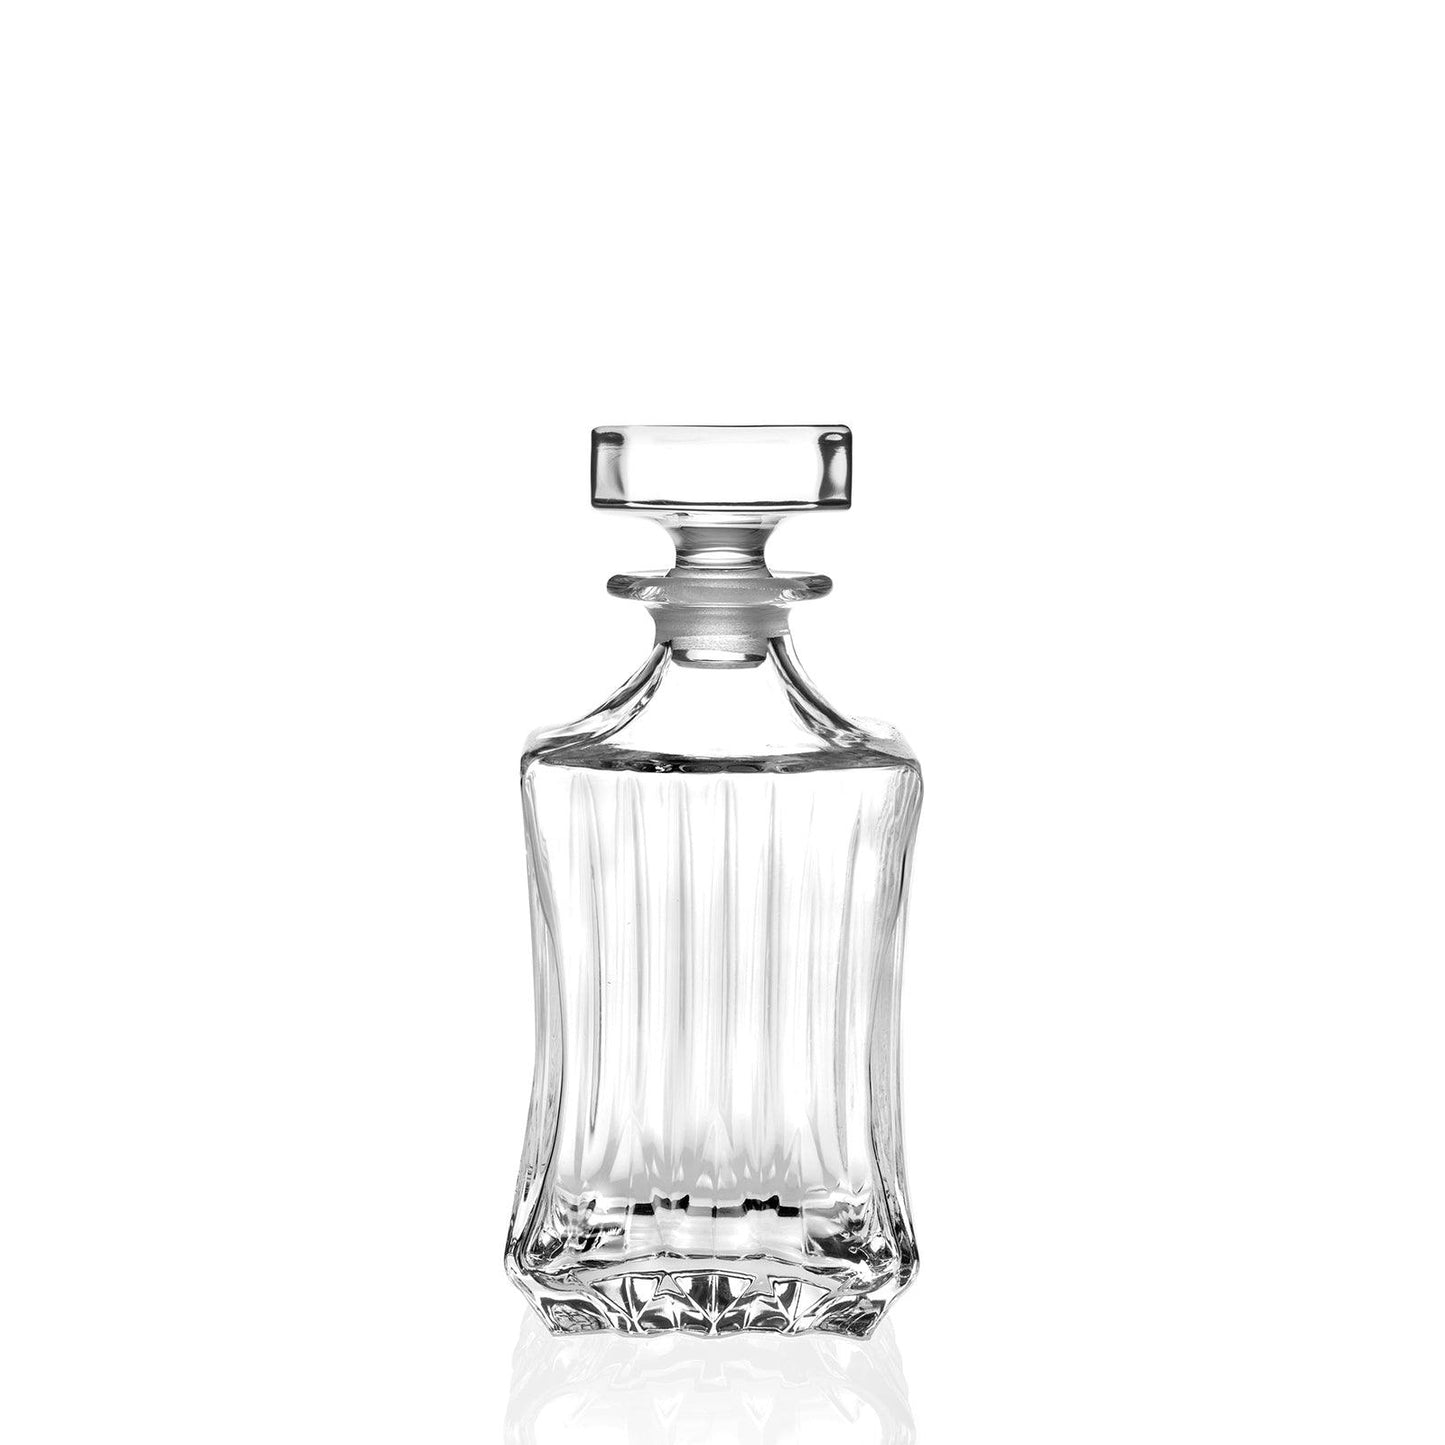 Adagio Premium Crystal Whiskey Decanter, Italy - Happyware Home Pvt Ltd